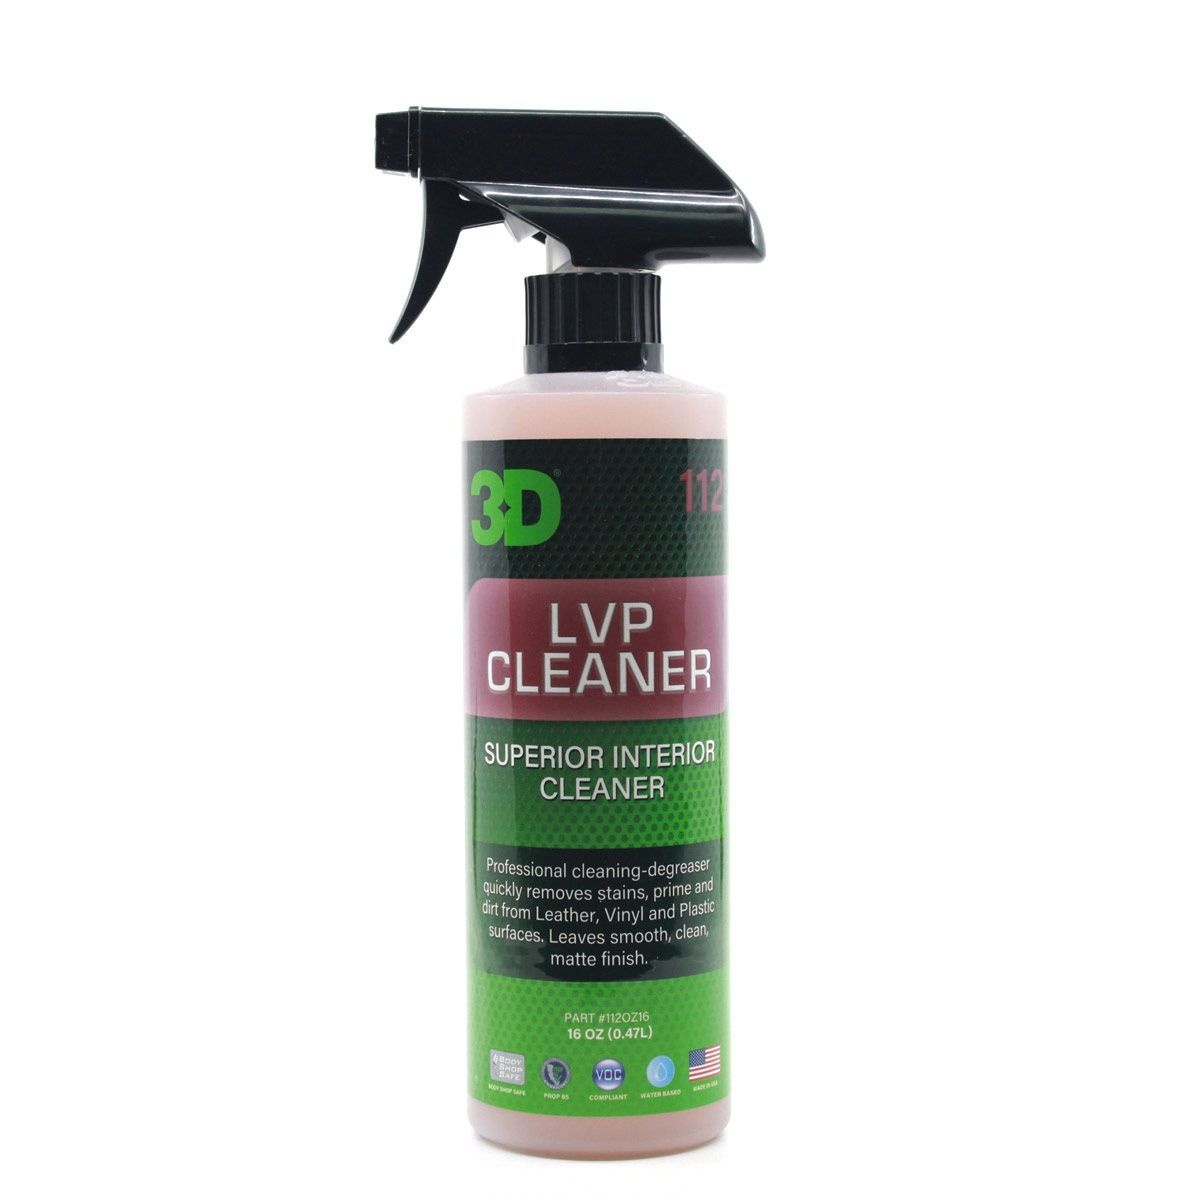 3D LVP CLEANER 16oz ดูแลภายในรุ่นท๊อป น้ำยาทำความสะอาดพร้อมเ